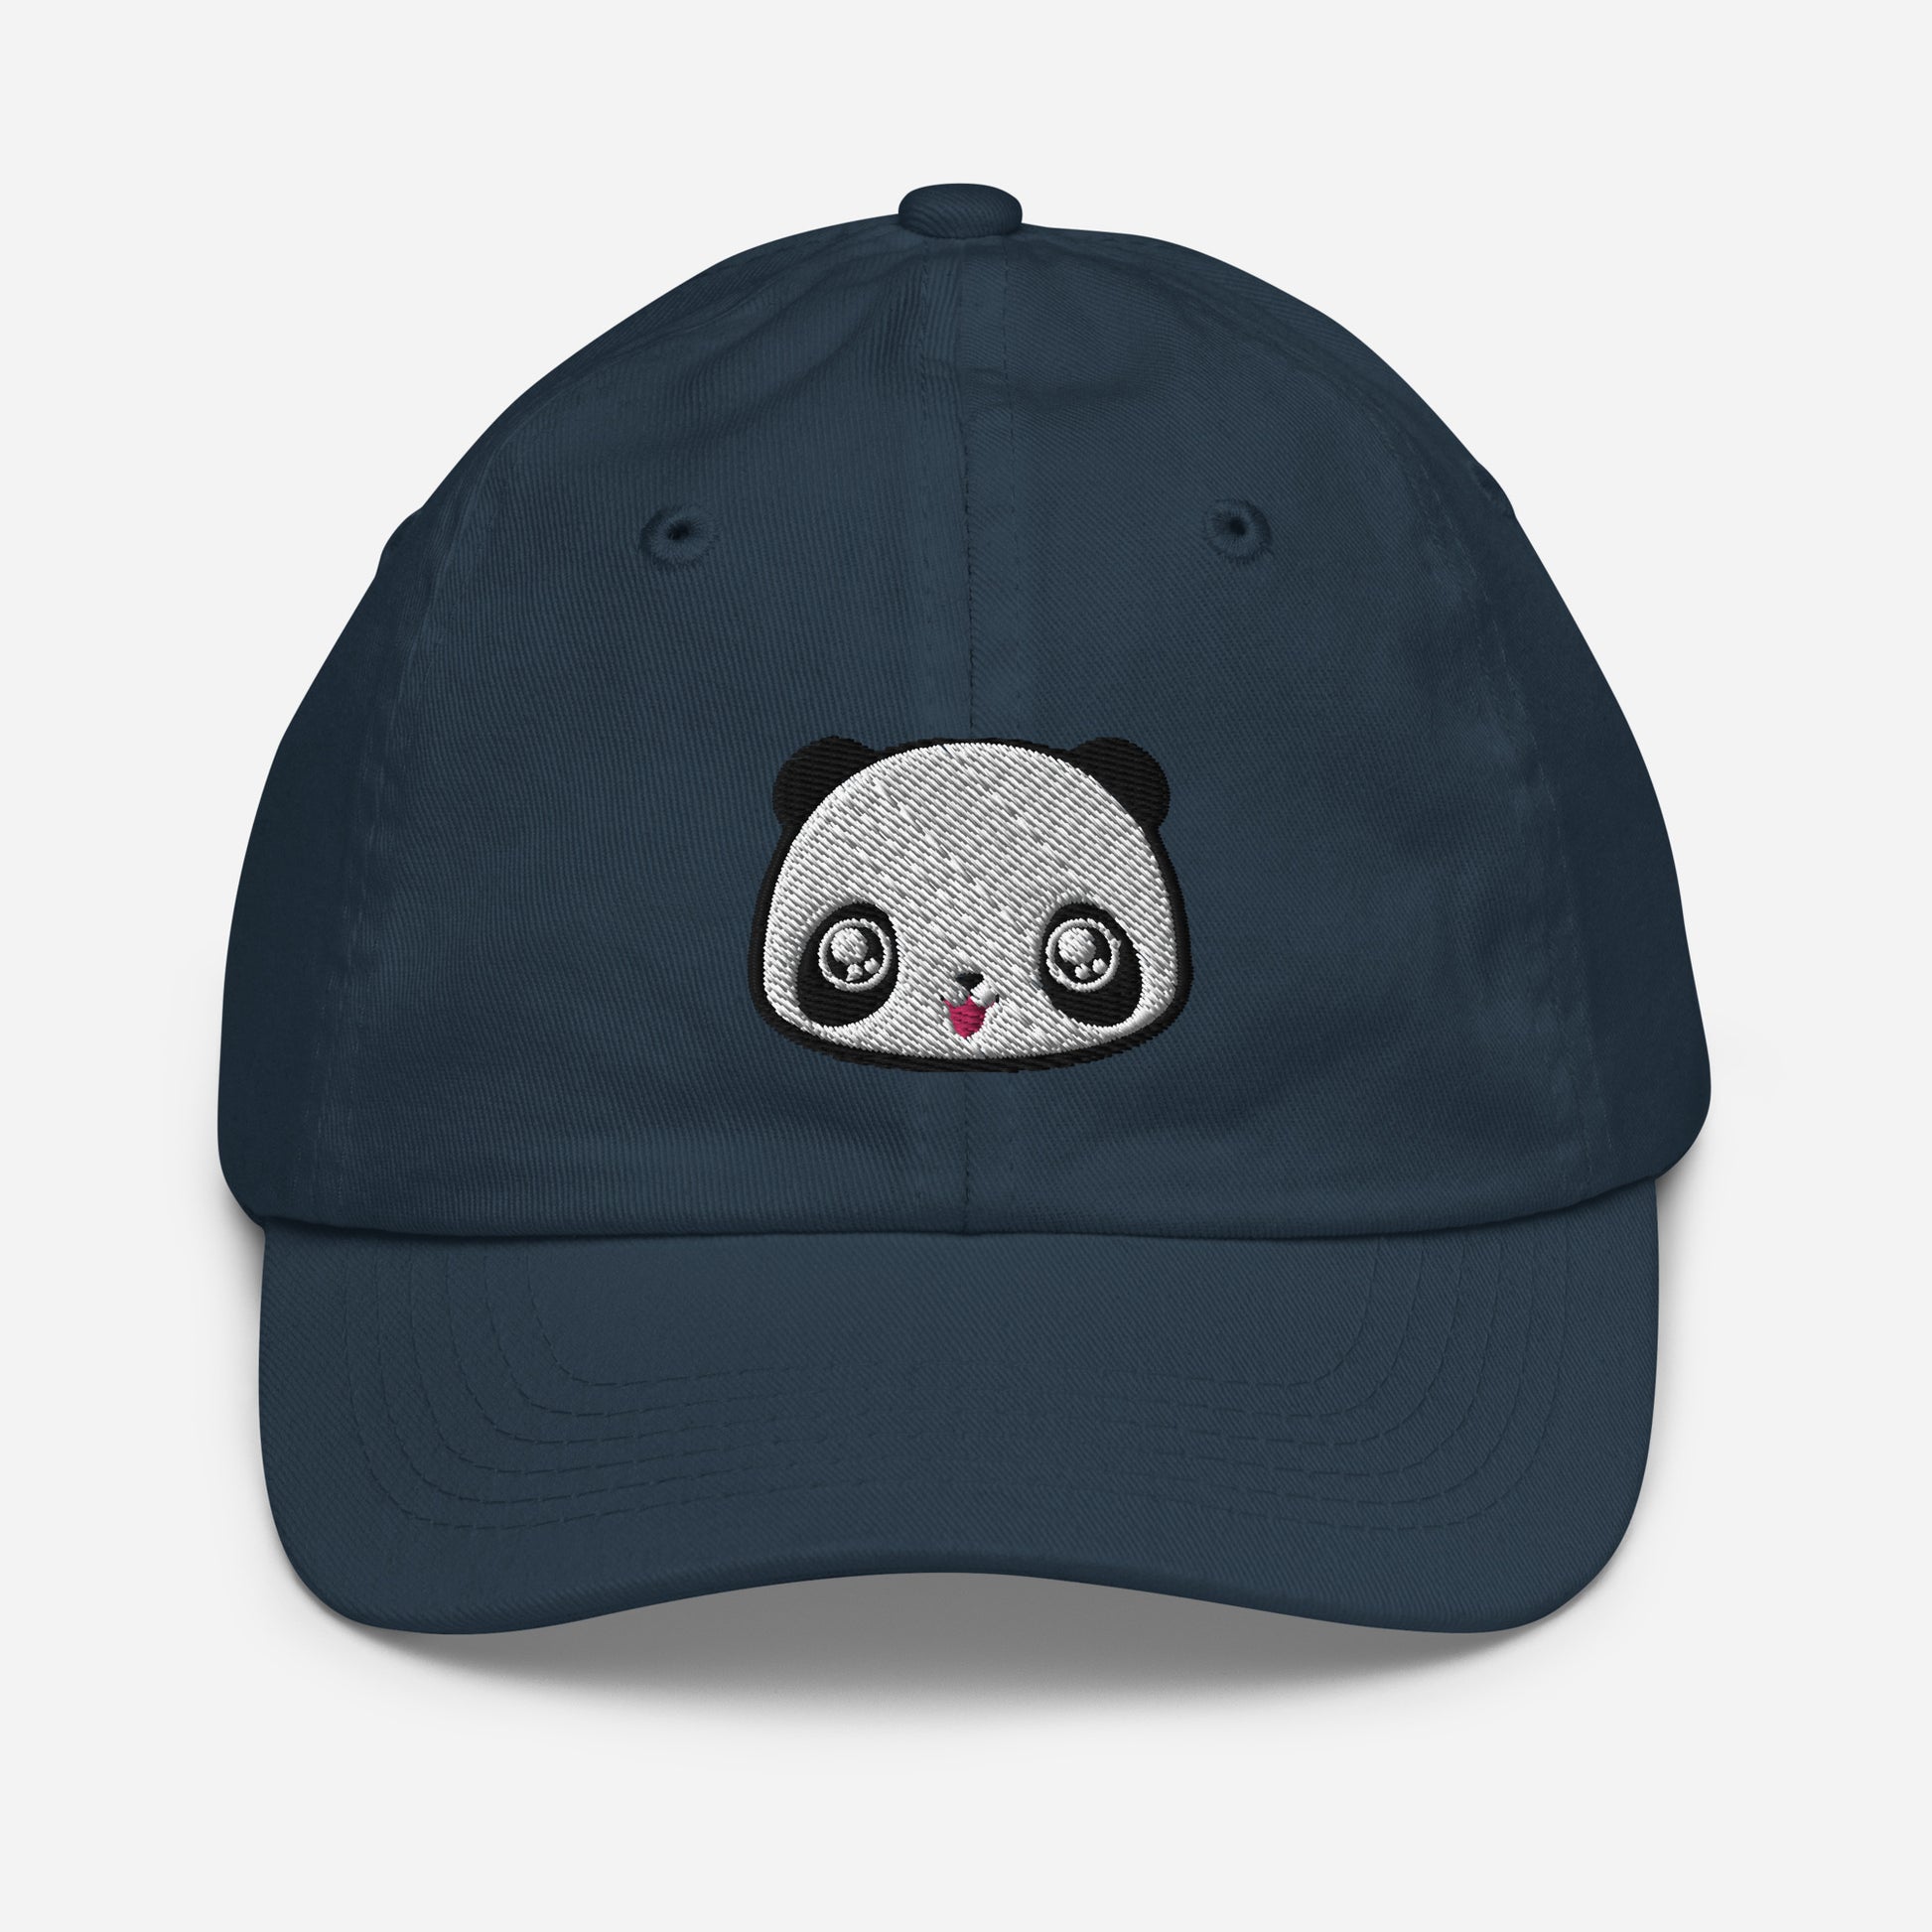 Navy baseball cap with print of panda head